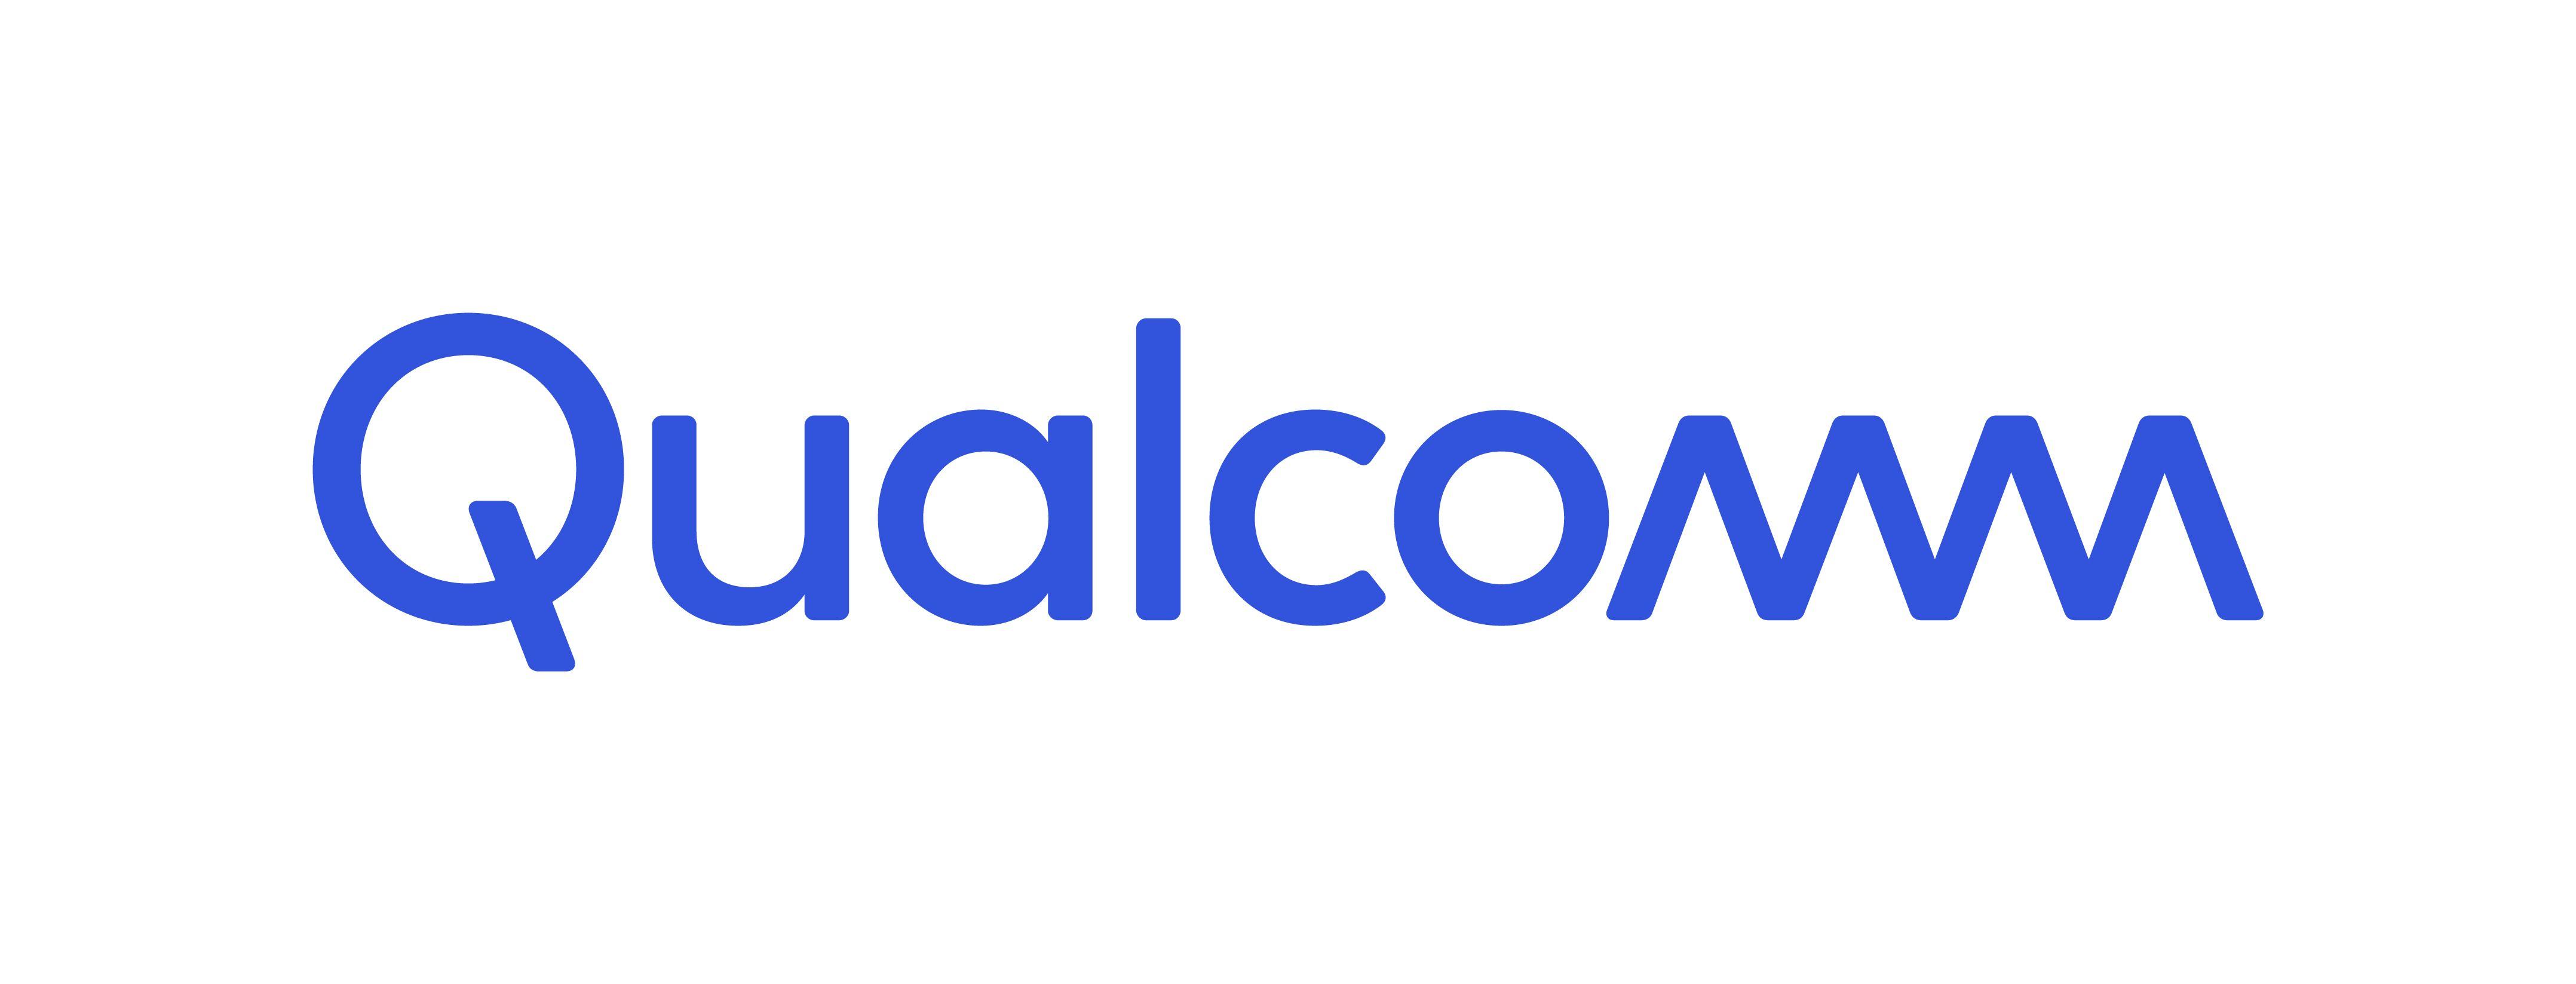 New Qualcomm Logo - New Qualcomm Logos - Please use for all future branding! - San Diego ...